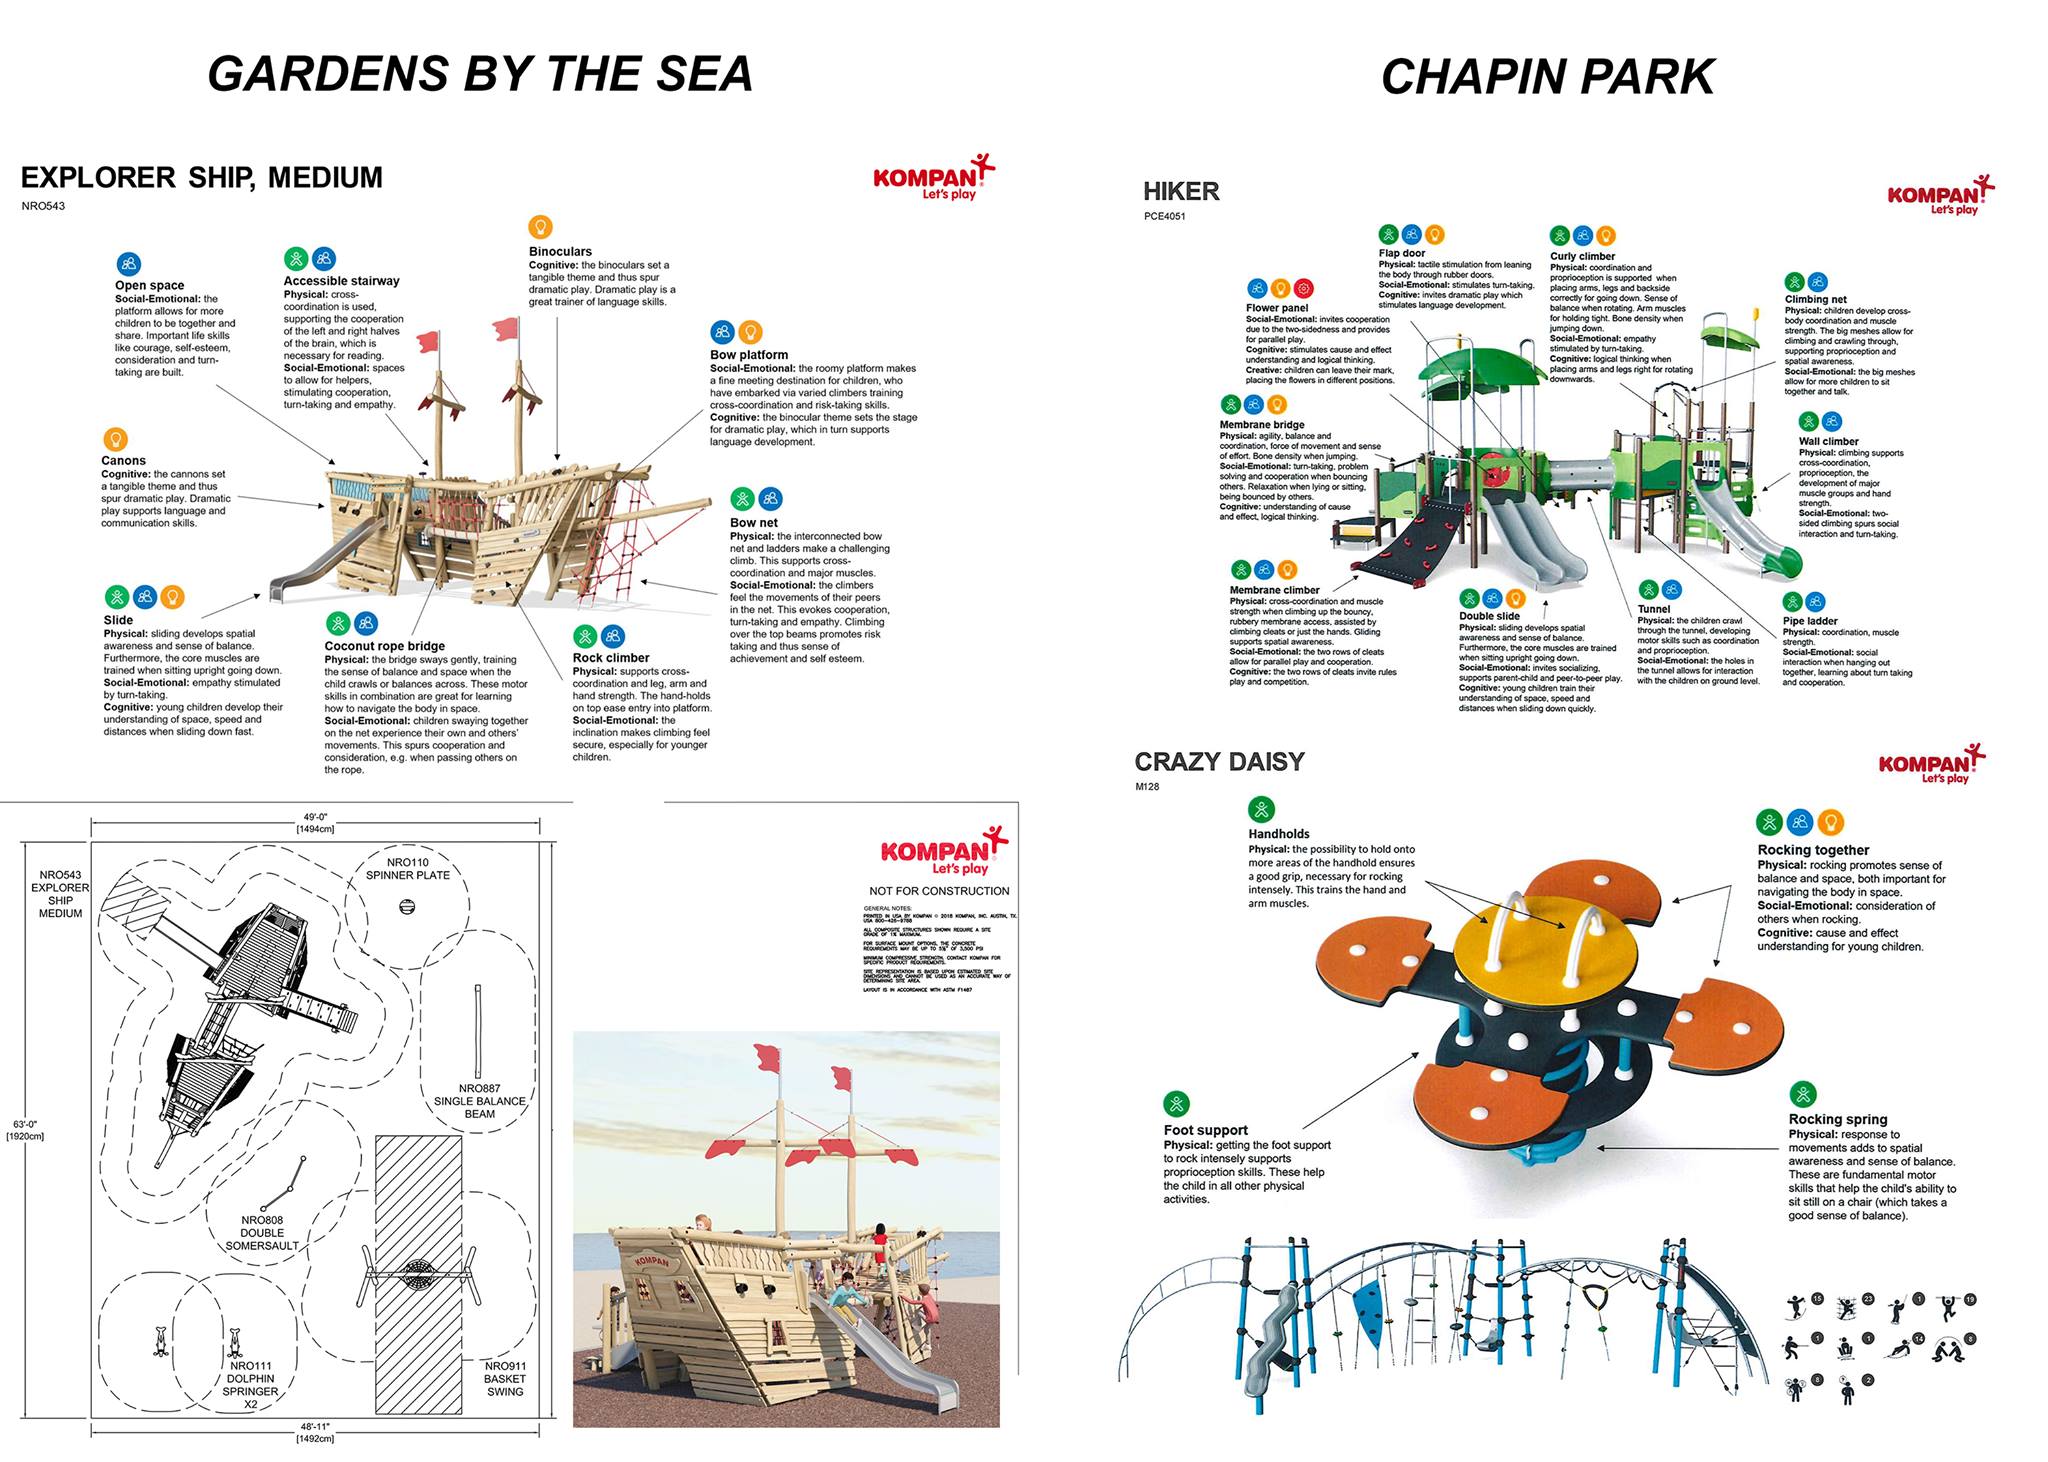 New Playground equipment Chapin Garden by tbe Sea